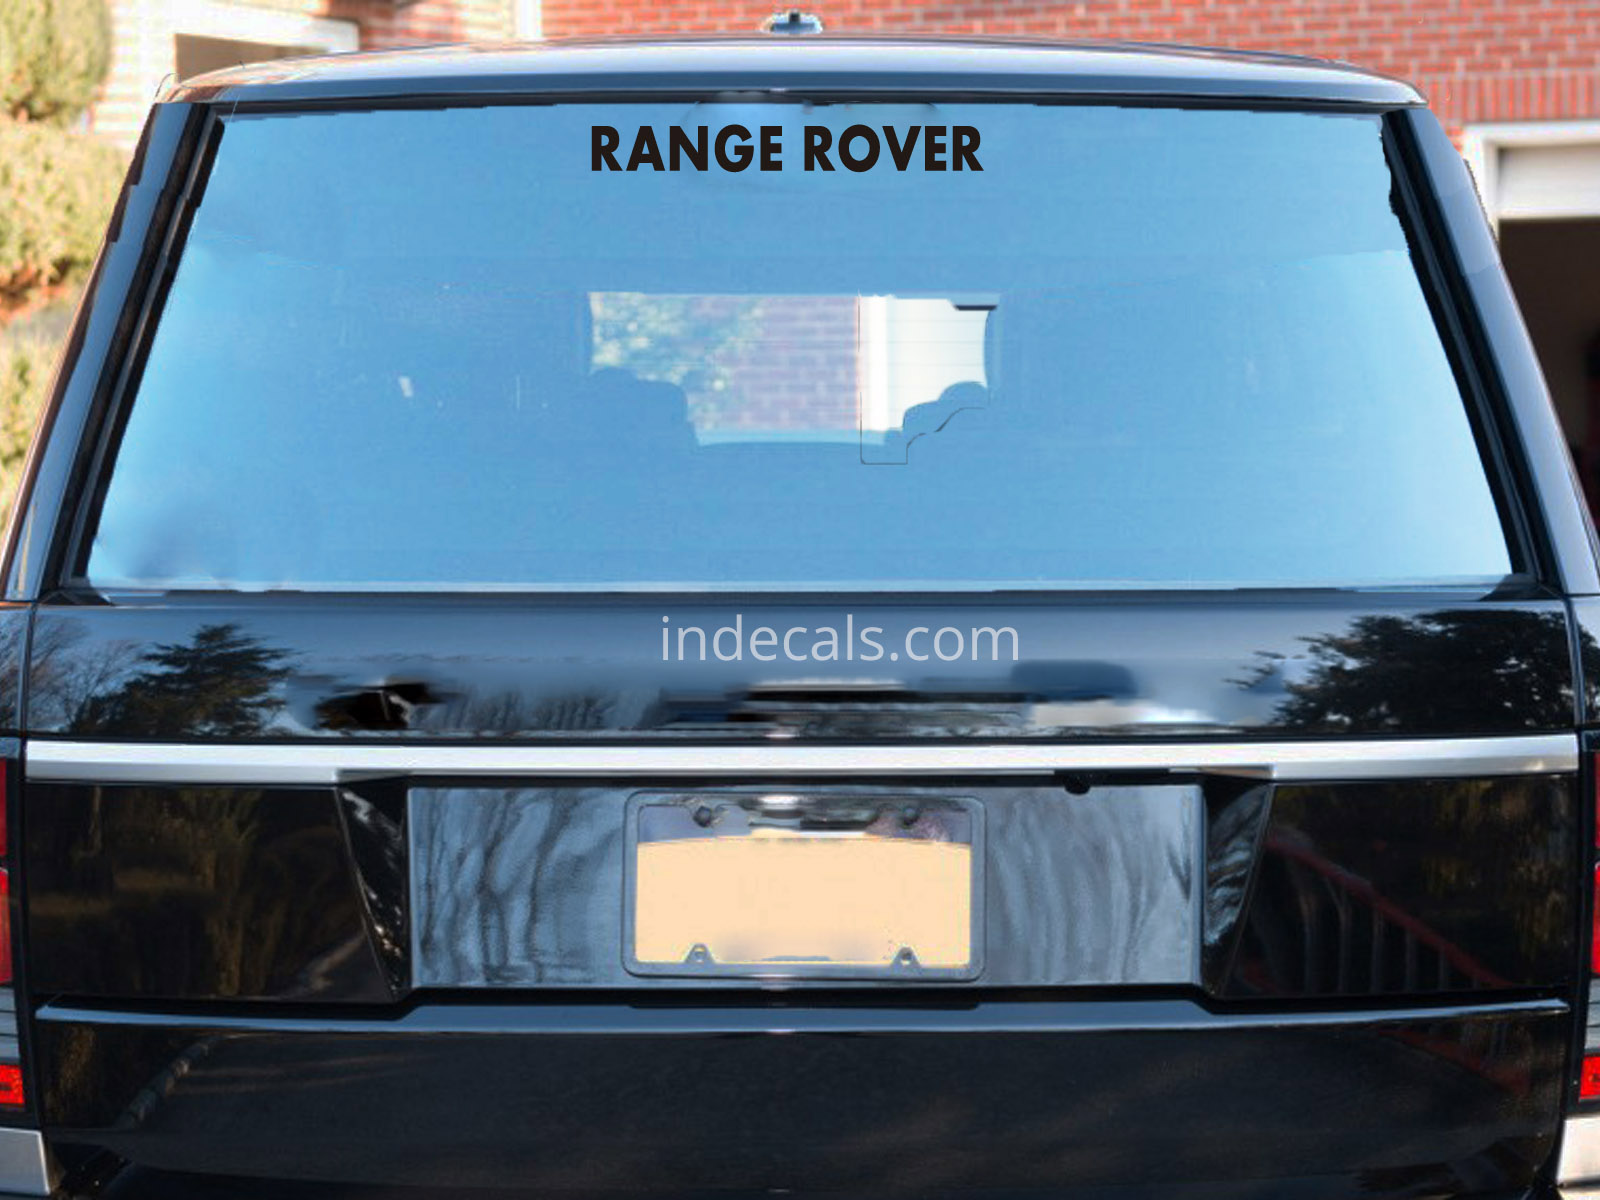 1 x Range Rover Sticker for Windshield or Back Window - Black